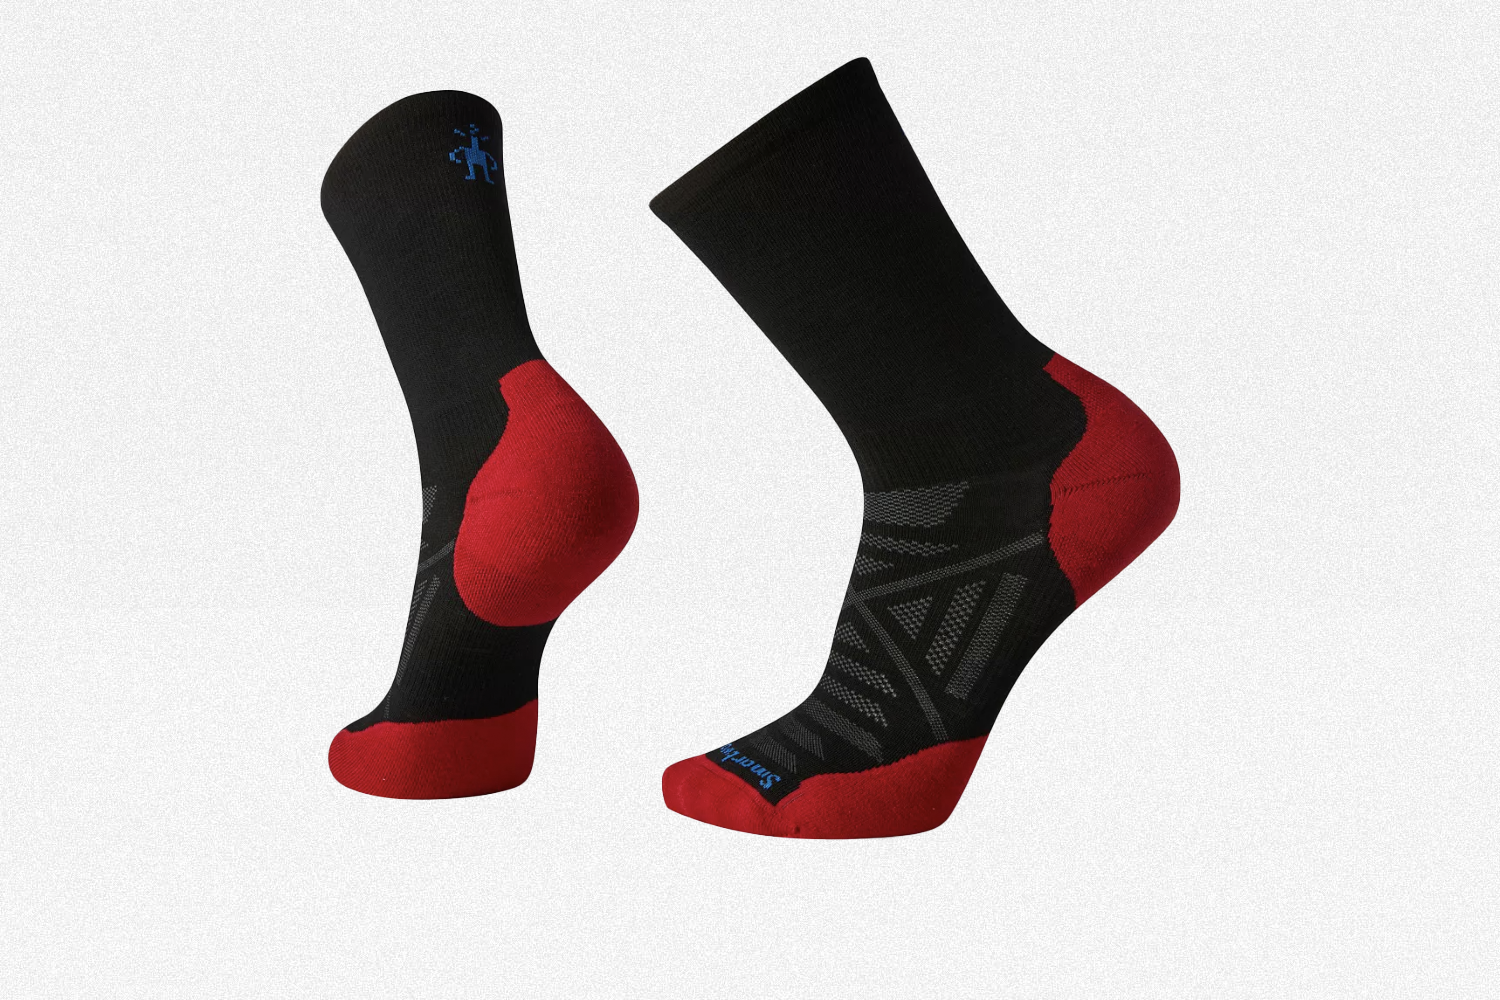 Smartwool PhD Run Light Elite Crew Socks in black and red